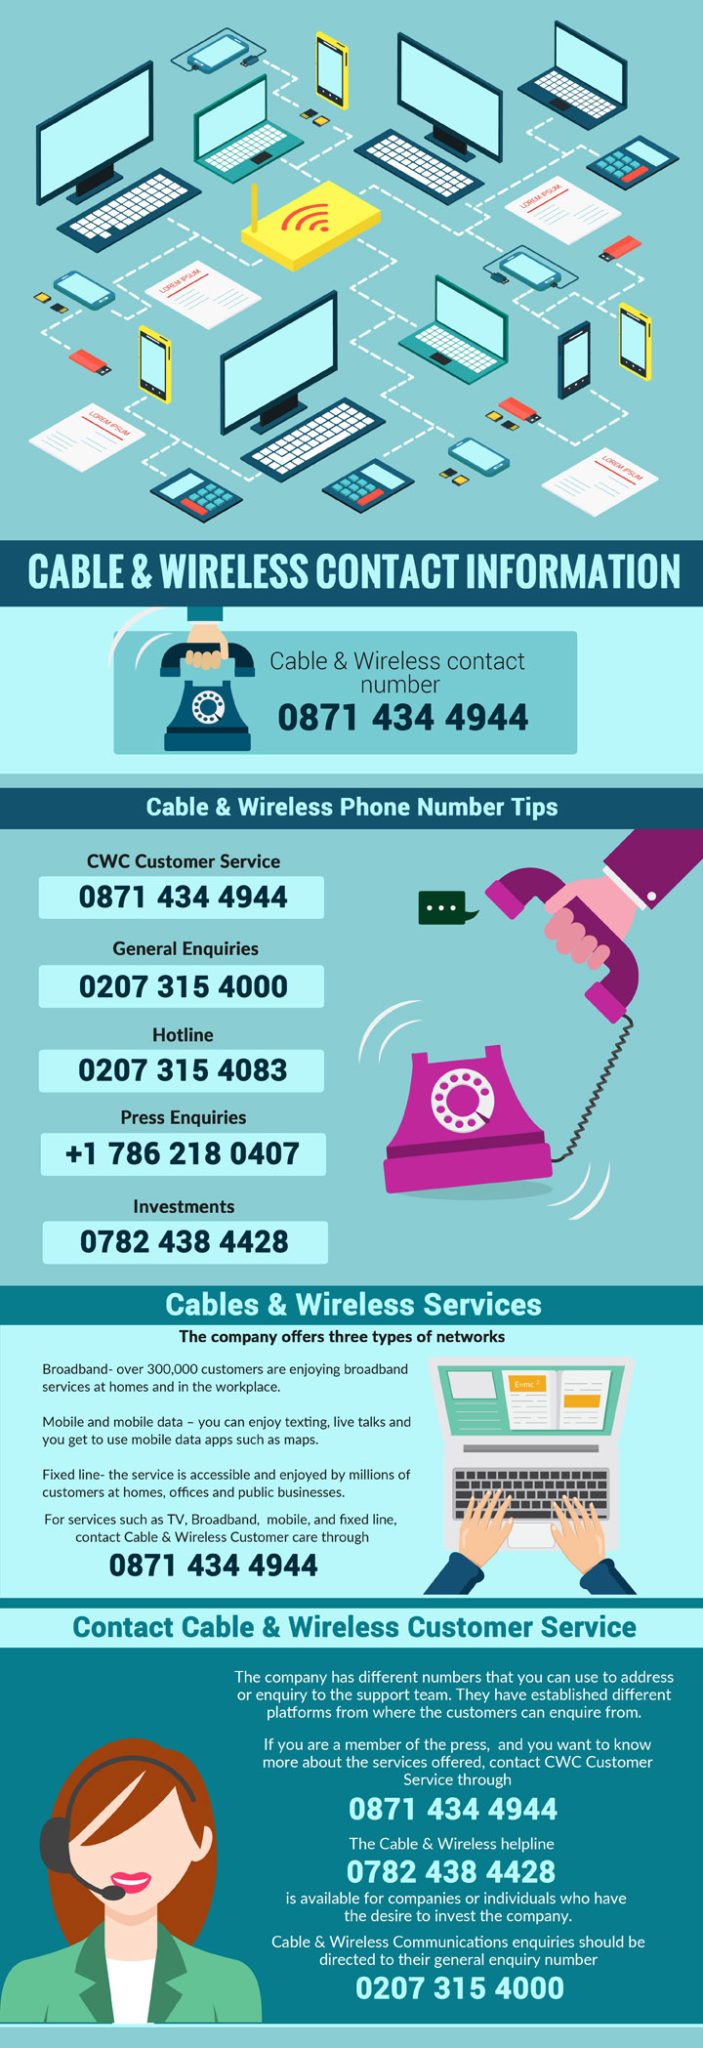 Cable & Wireless Helpline